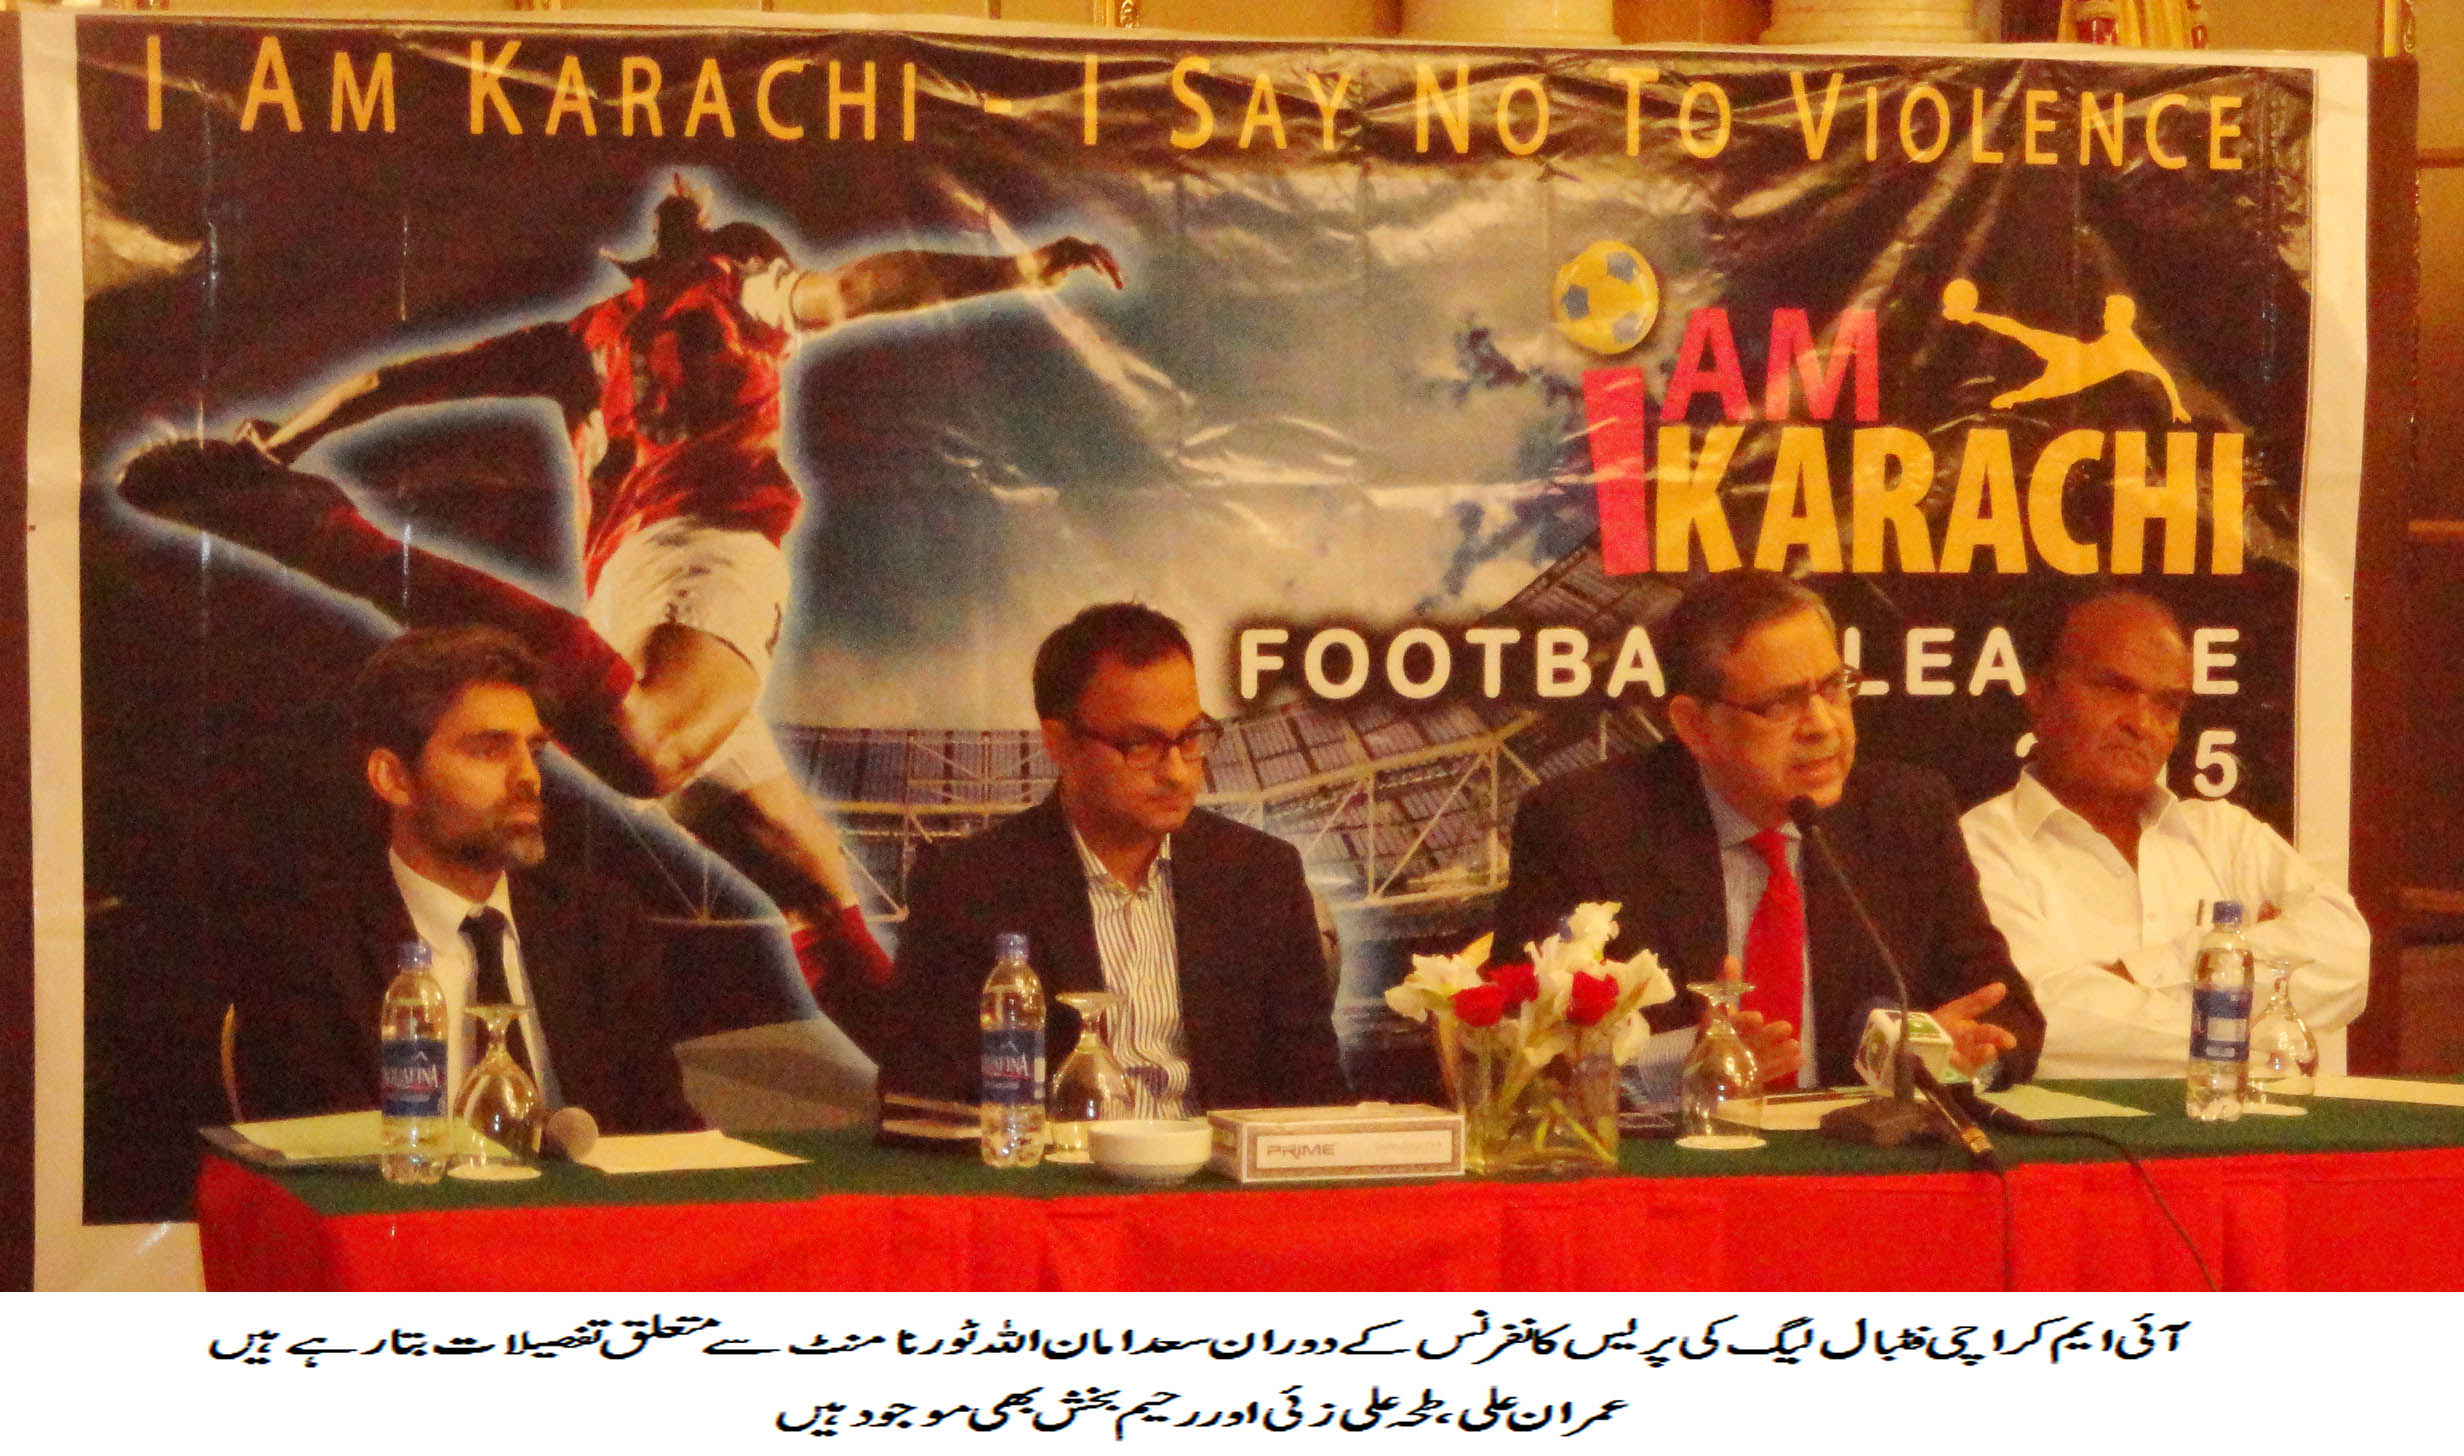 “I am Karachi” football tournament to start next year